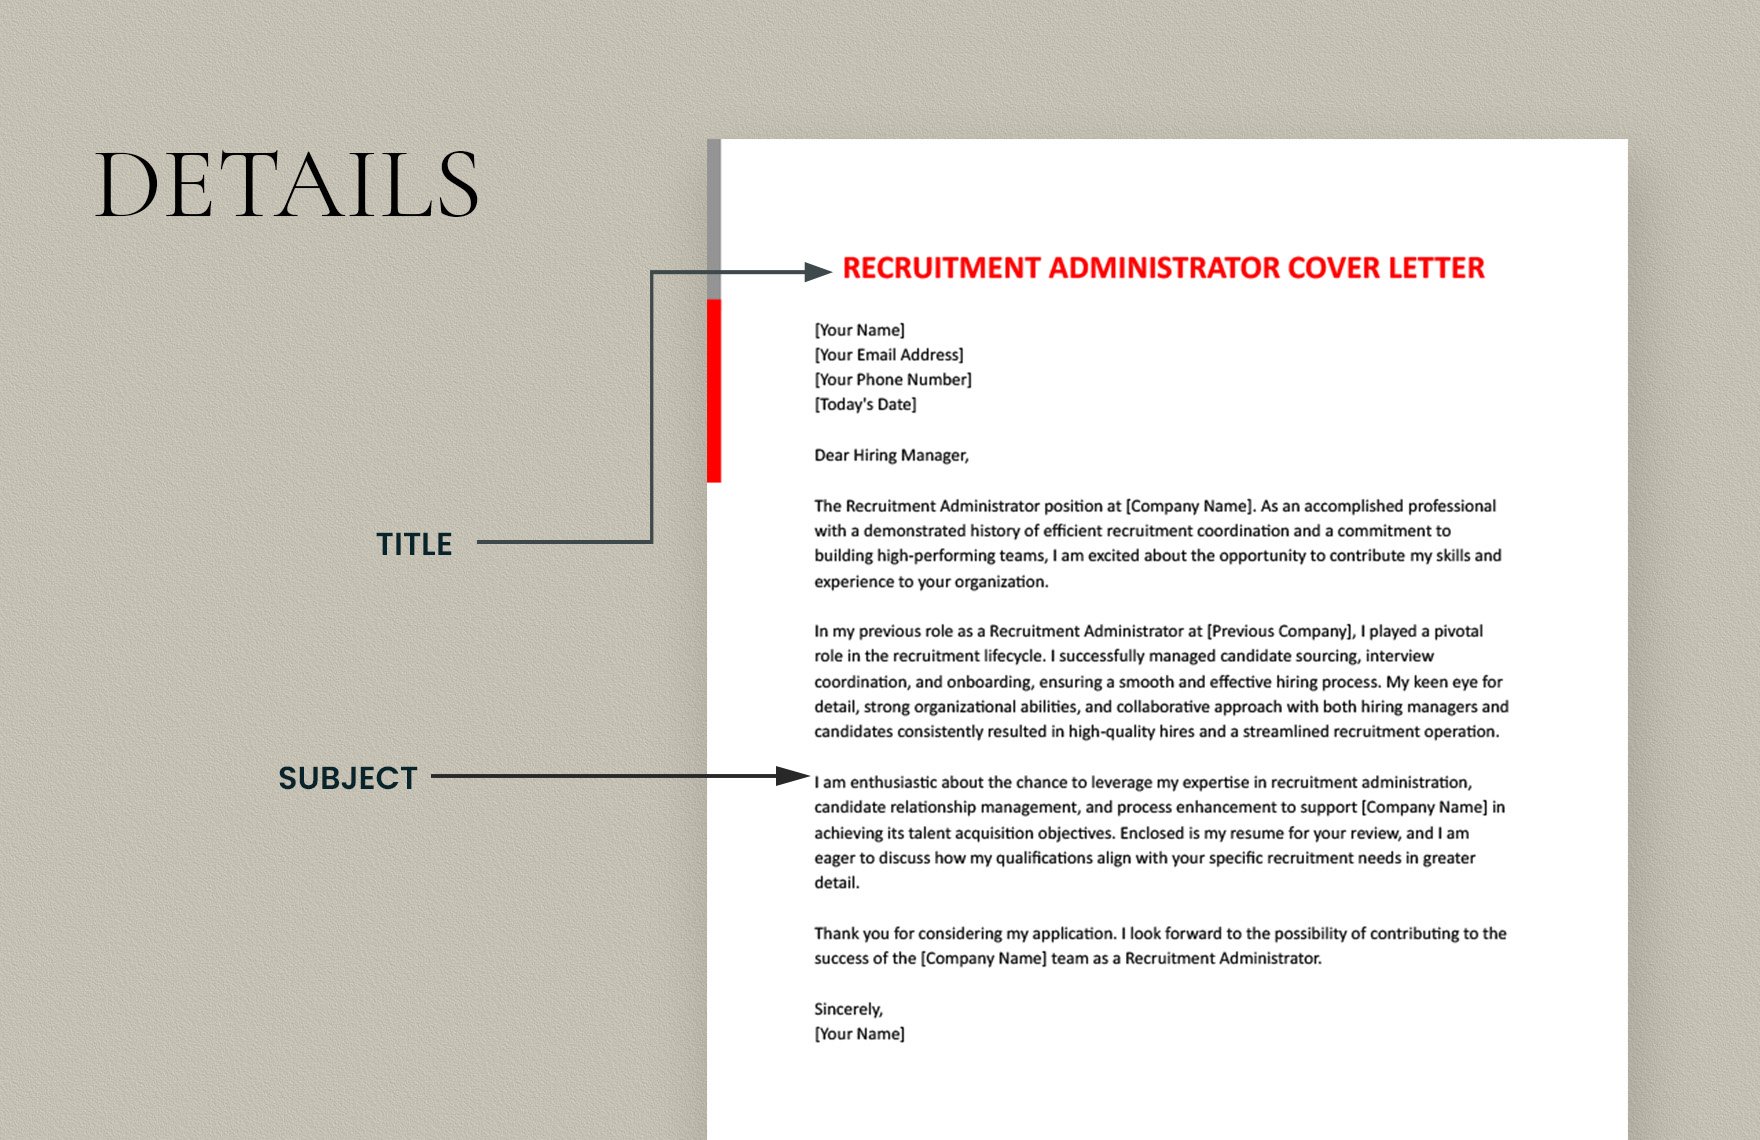 Recruitment Administrator Cover Letter